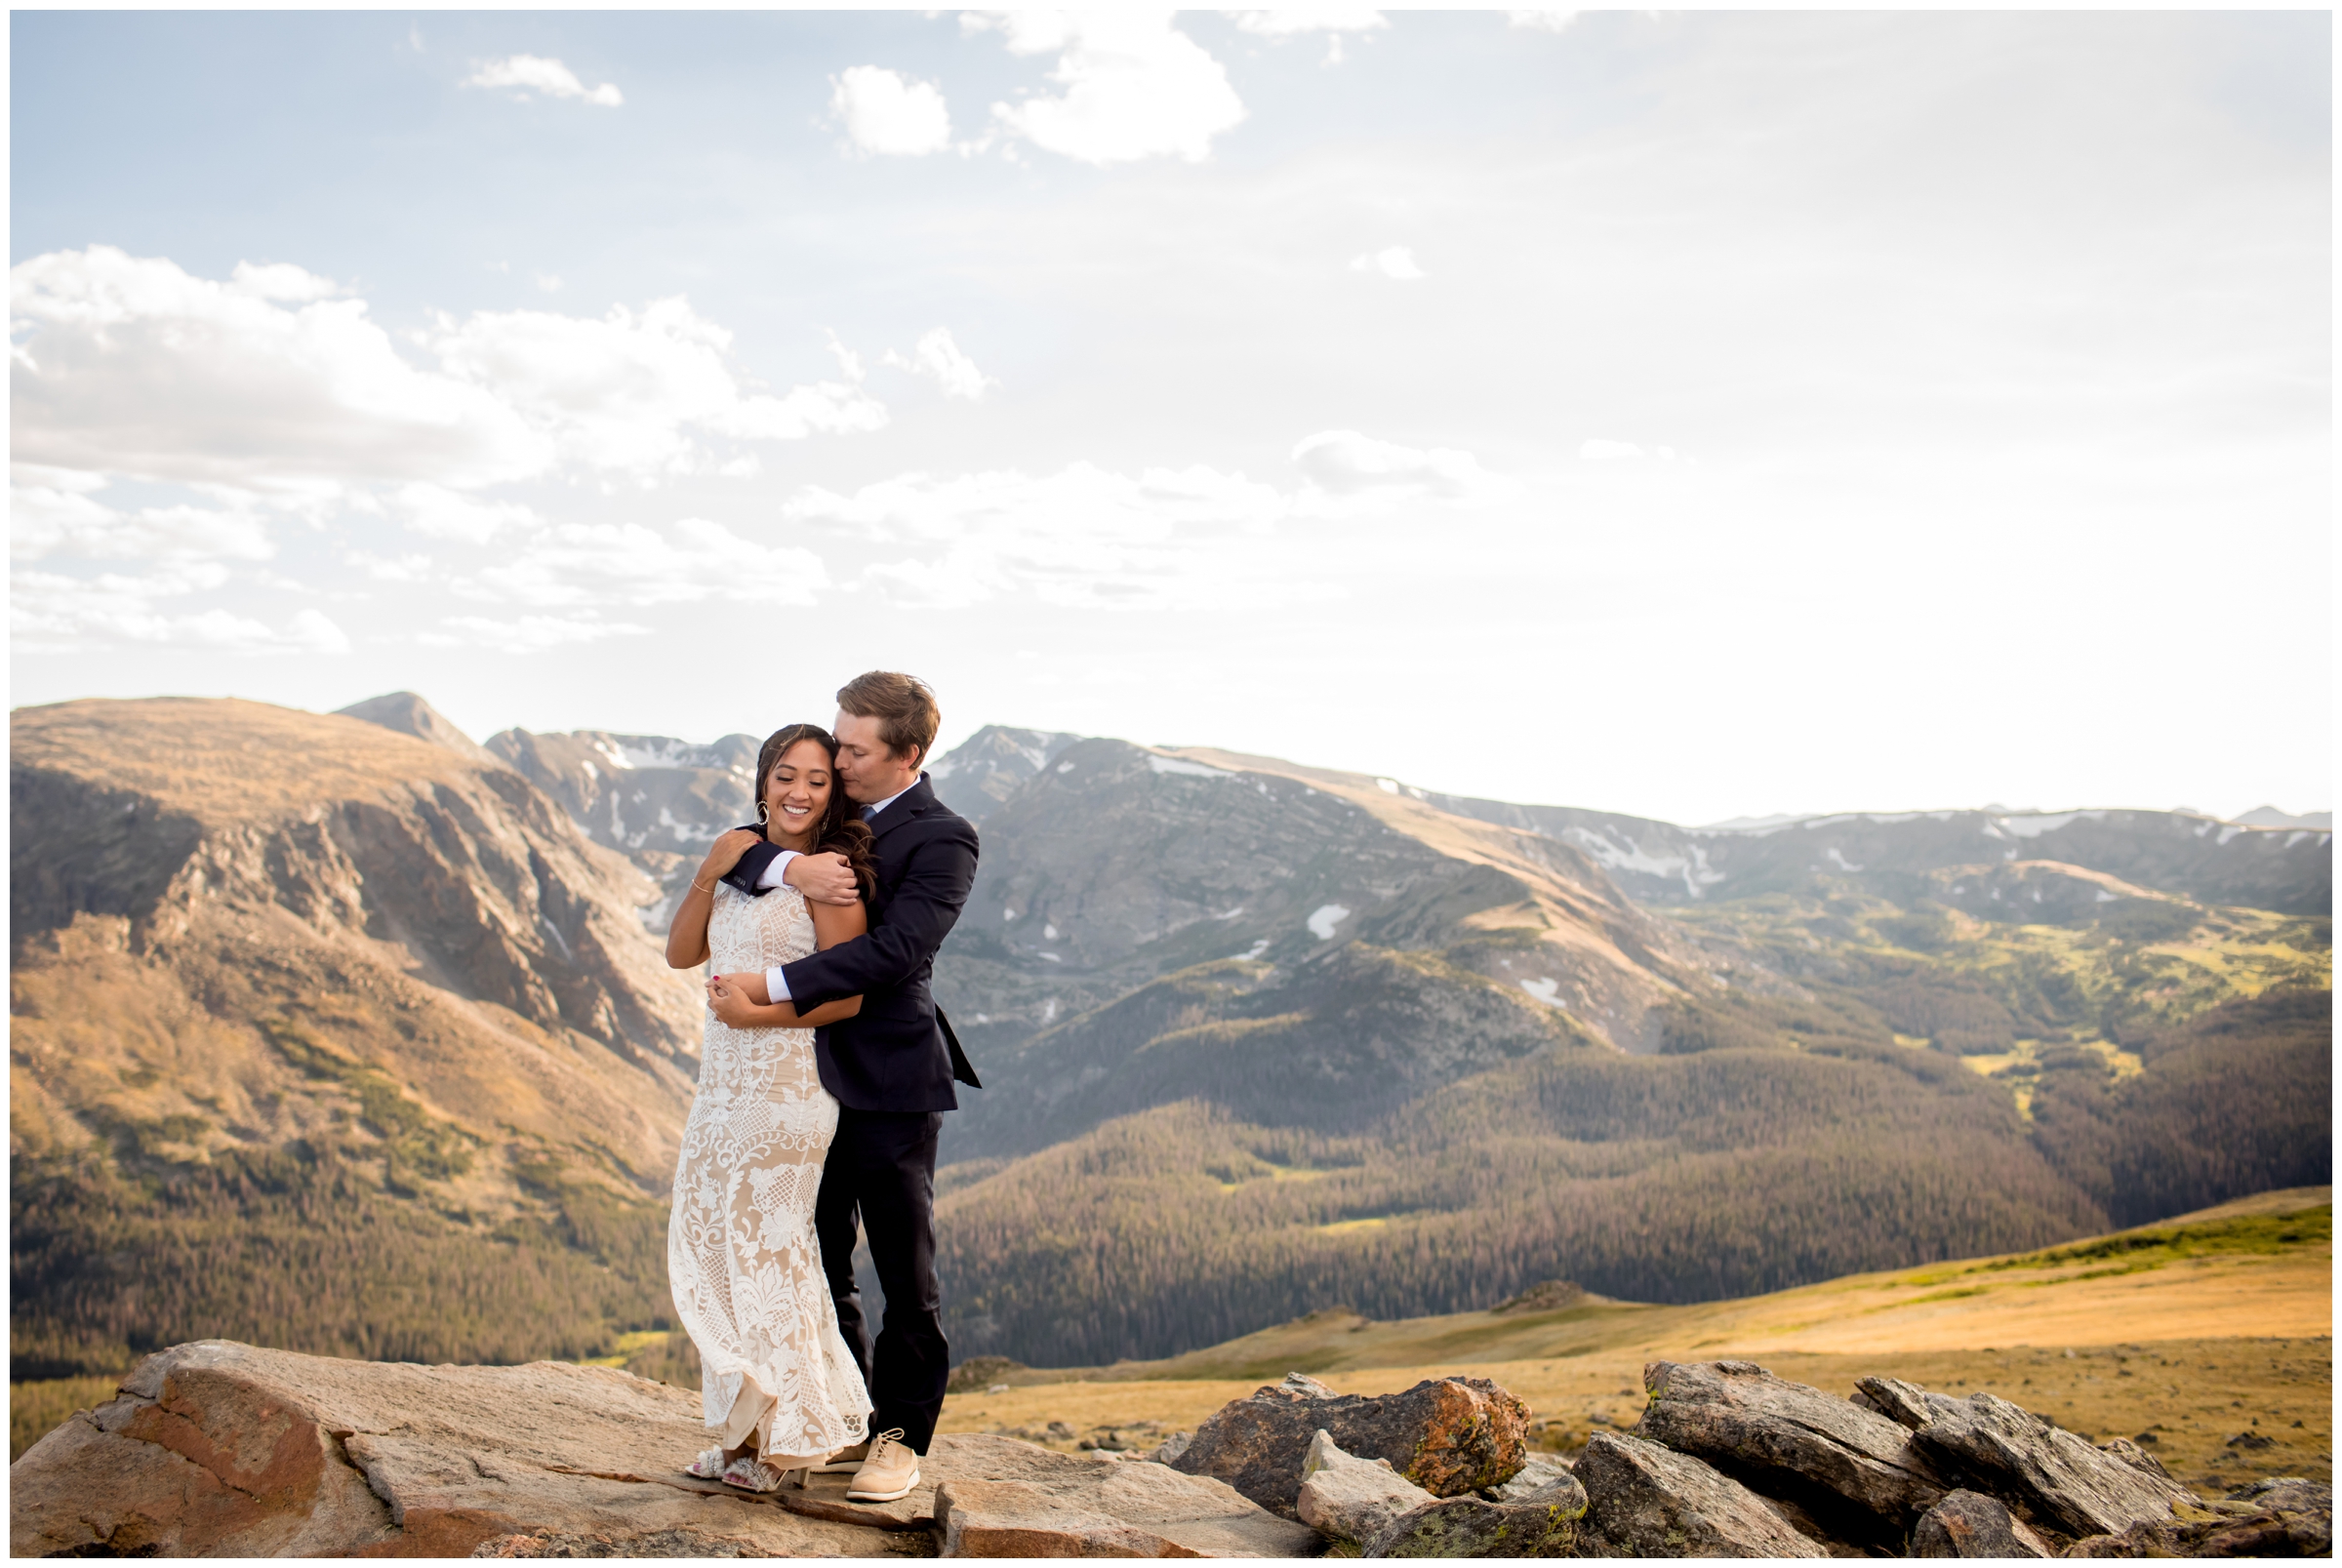 Estes Park Colorado mountain elopement photography inspiration by Plum Pretty Photo